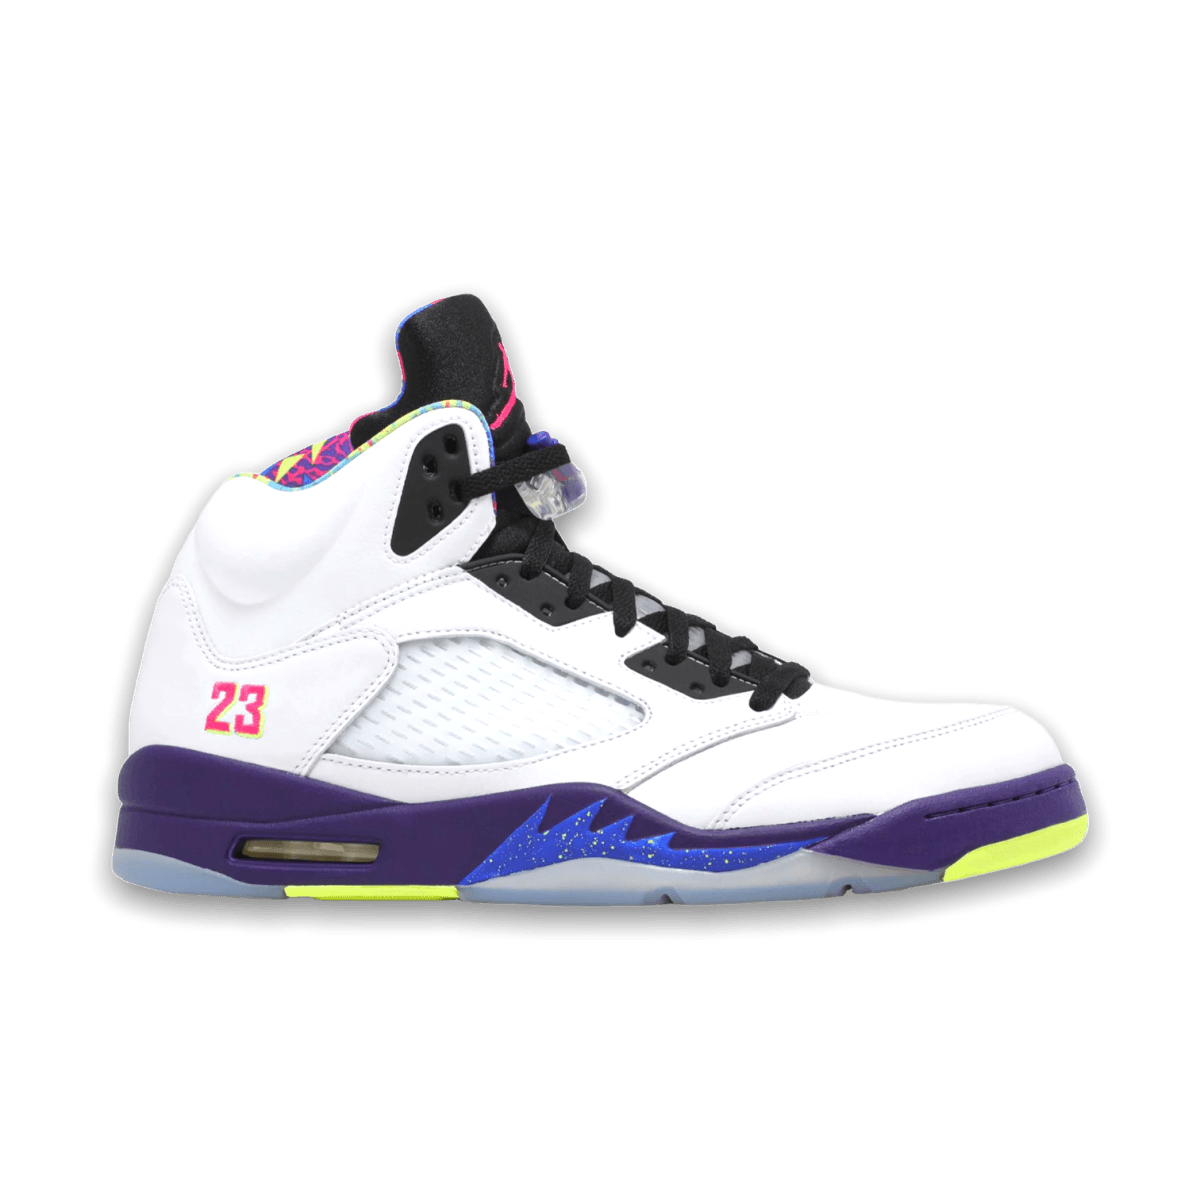 Jordan 5 Retro 'Alternate Bel-Air' - Mid Sneaker - Jawns on Fire Sneakers & Streetwear